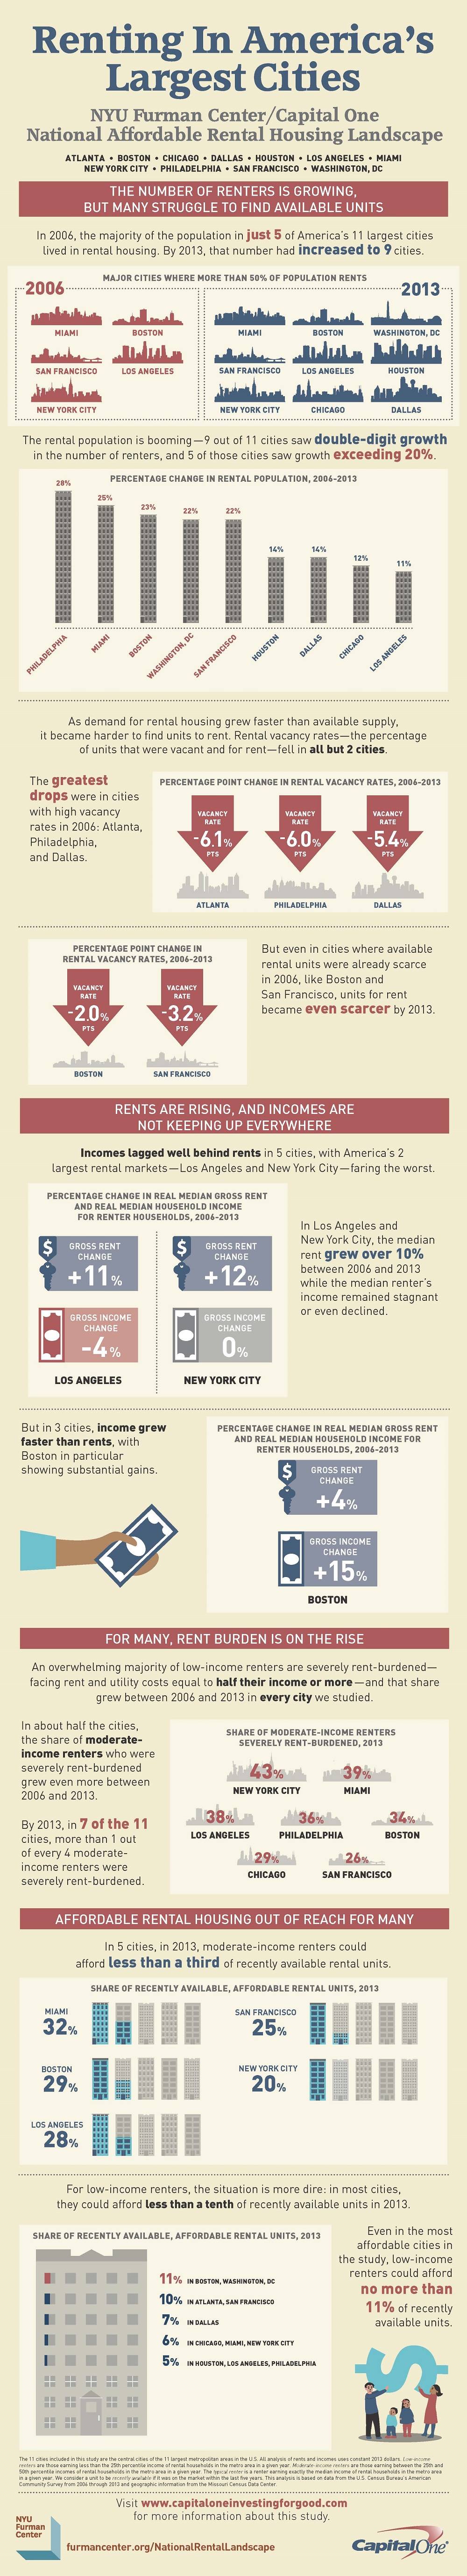 Rental housing infographic